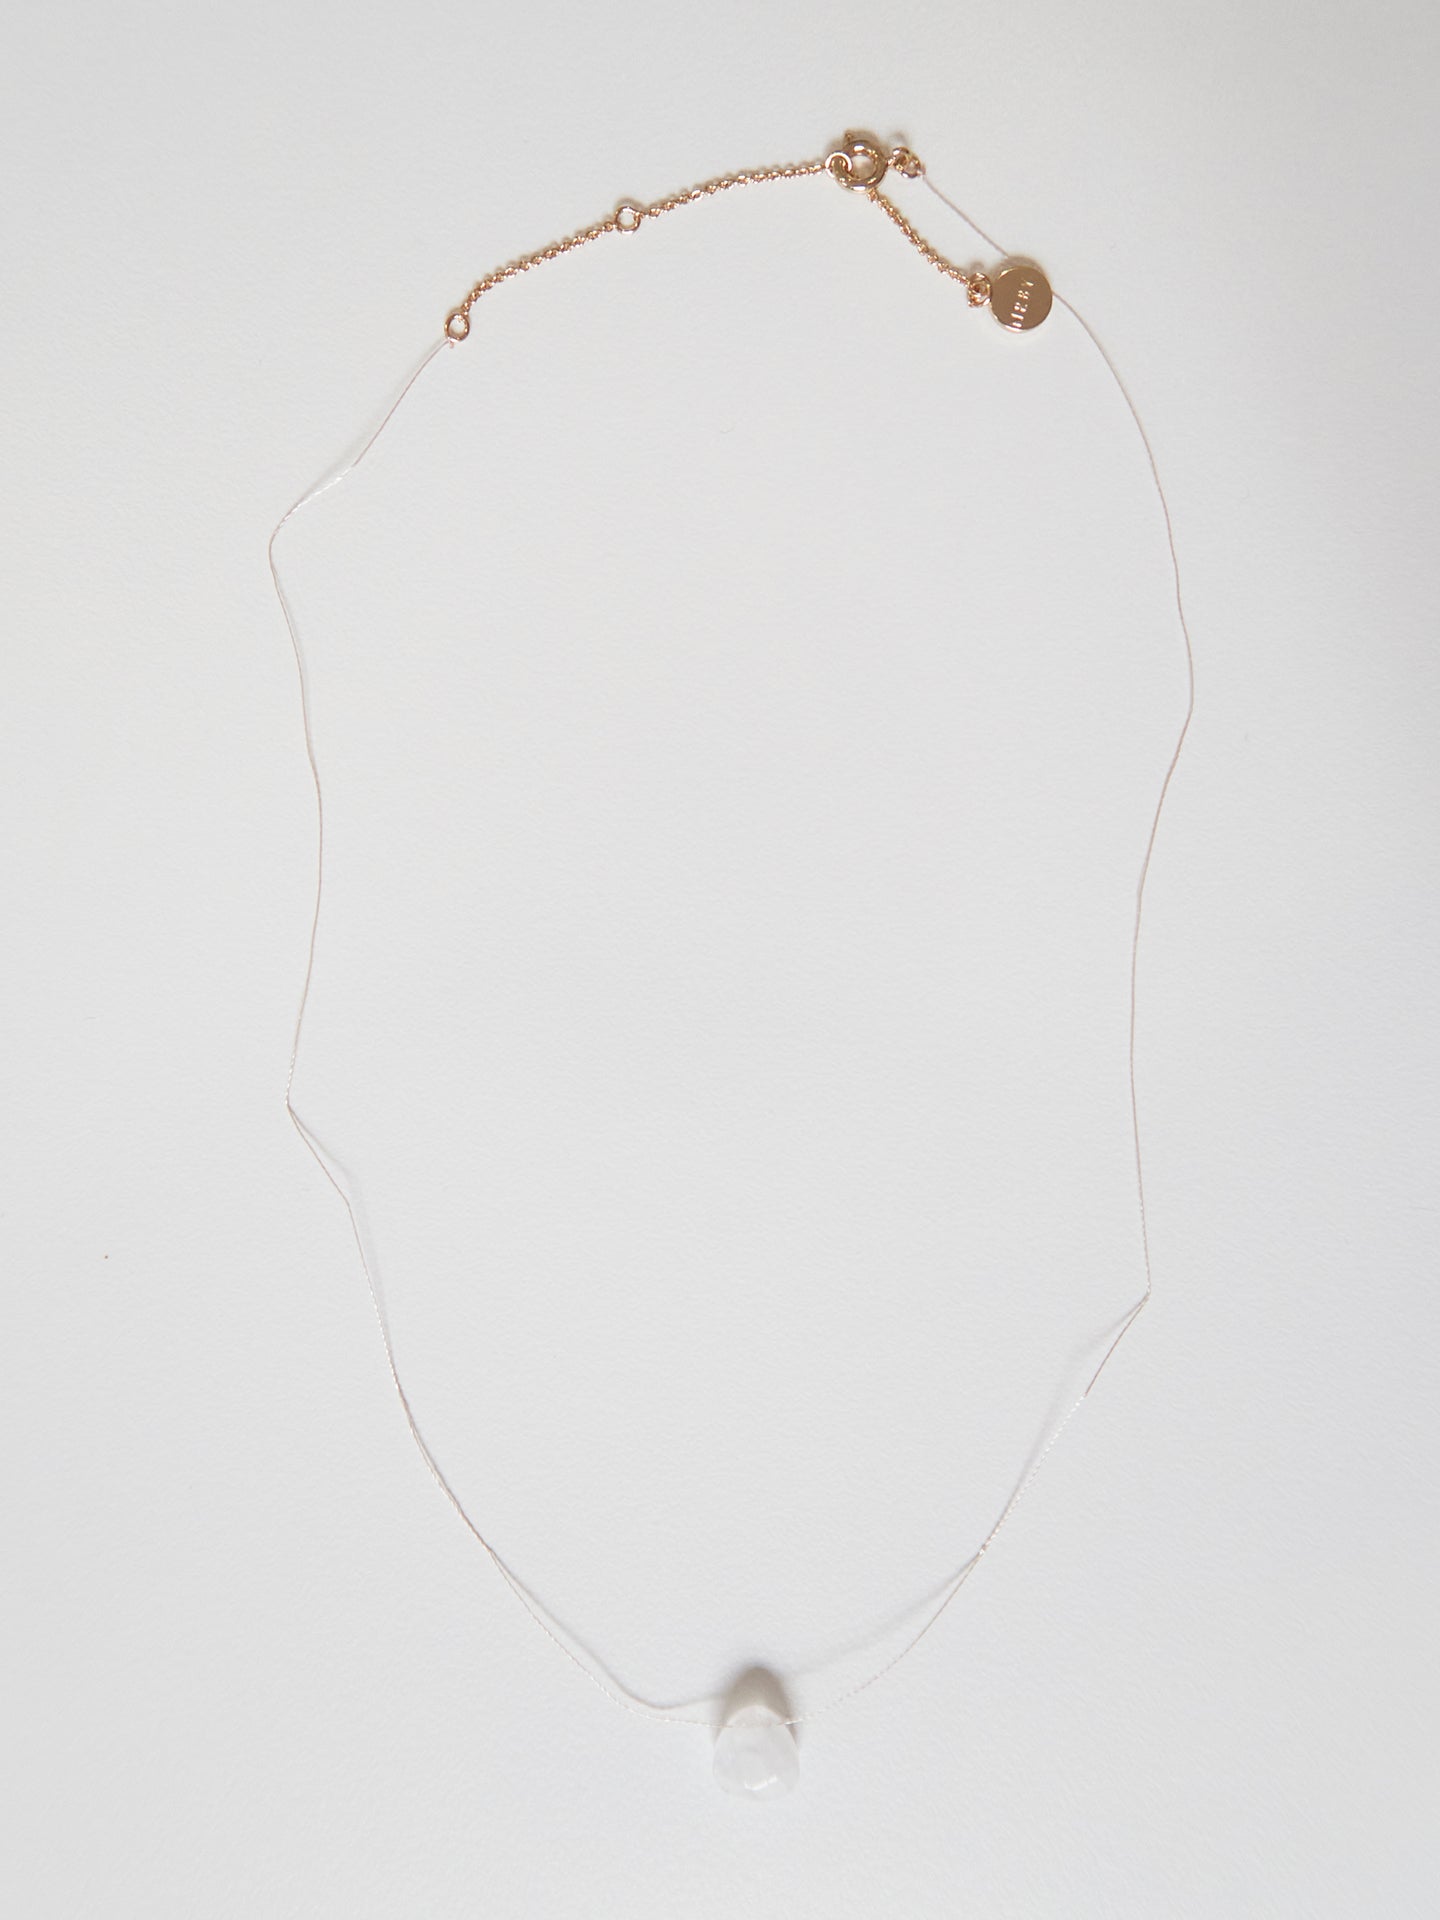 Silk thread necklace with clear quartz